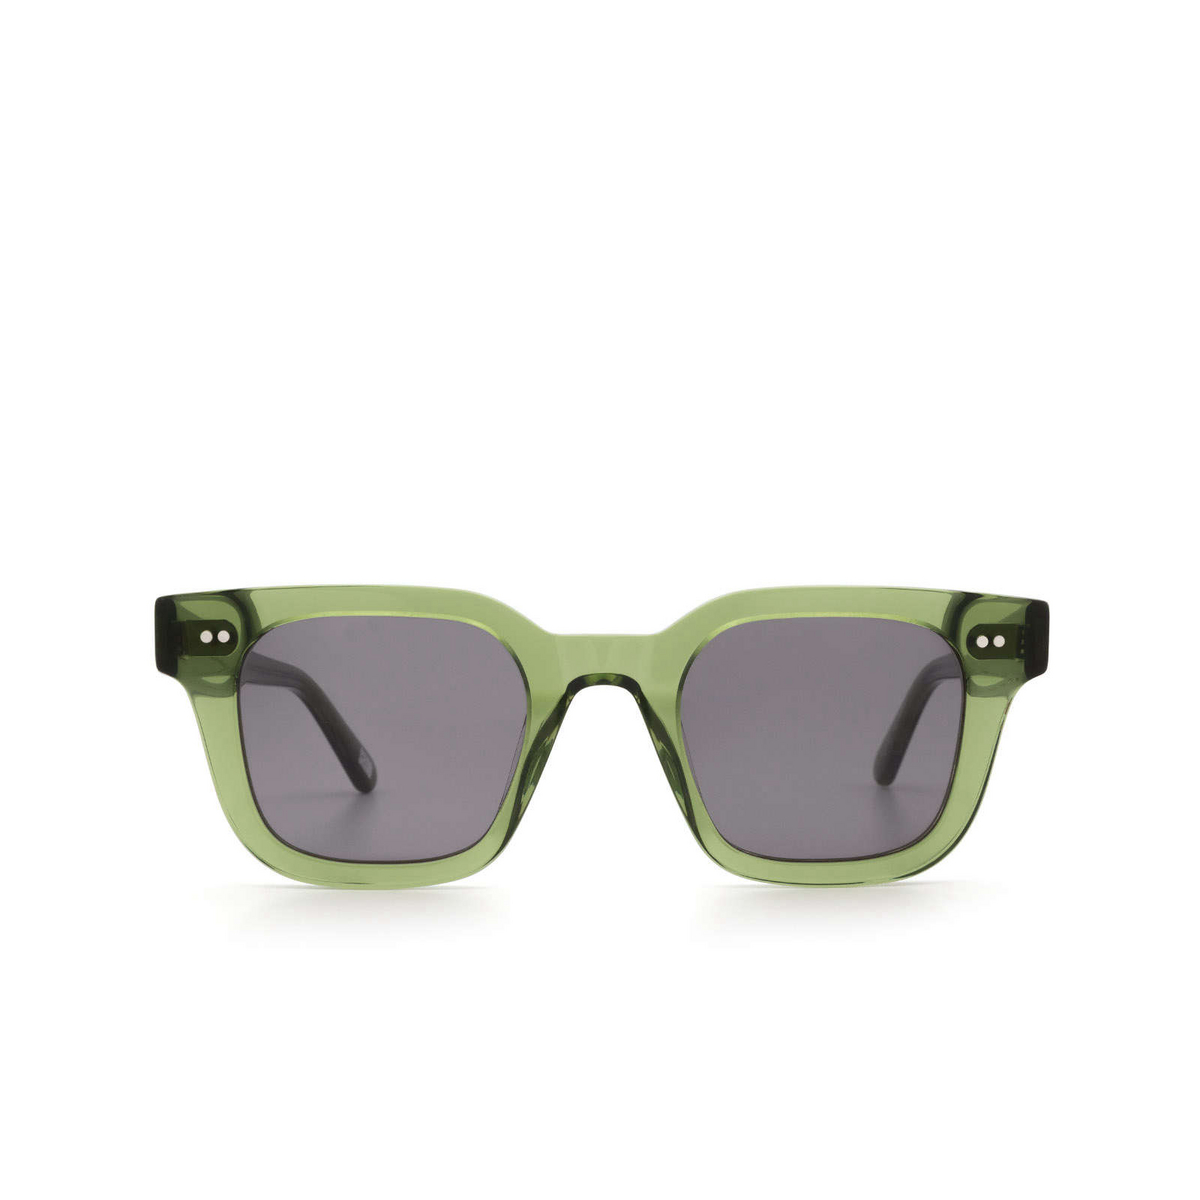 Chimi #004 Sunglasses KIWI Green - front view